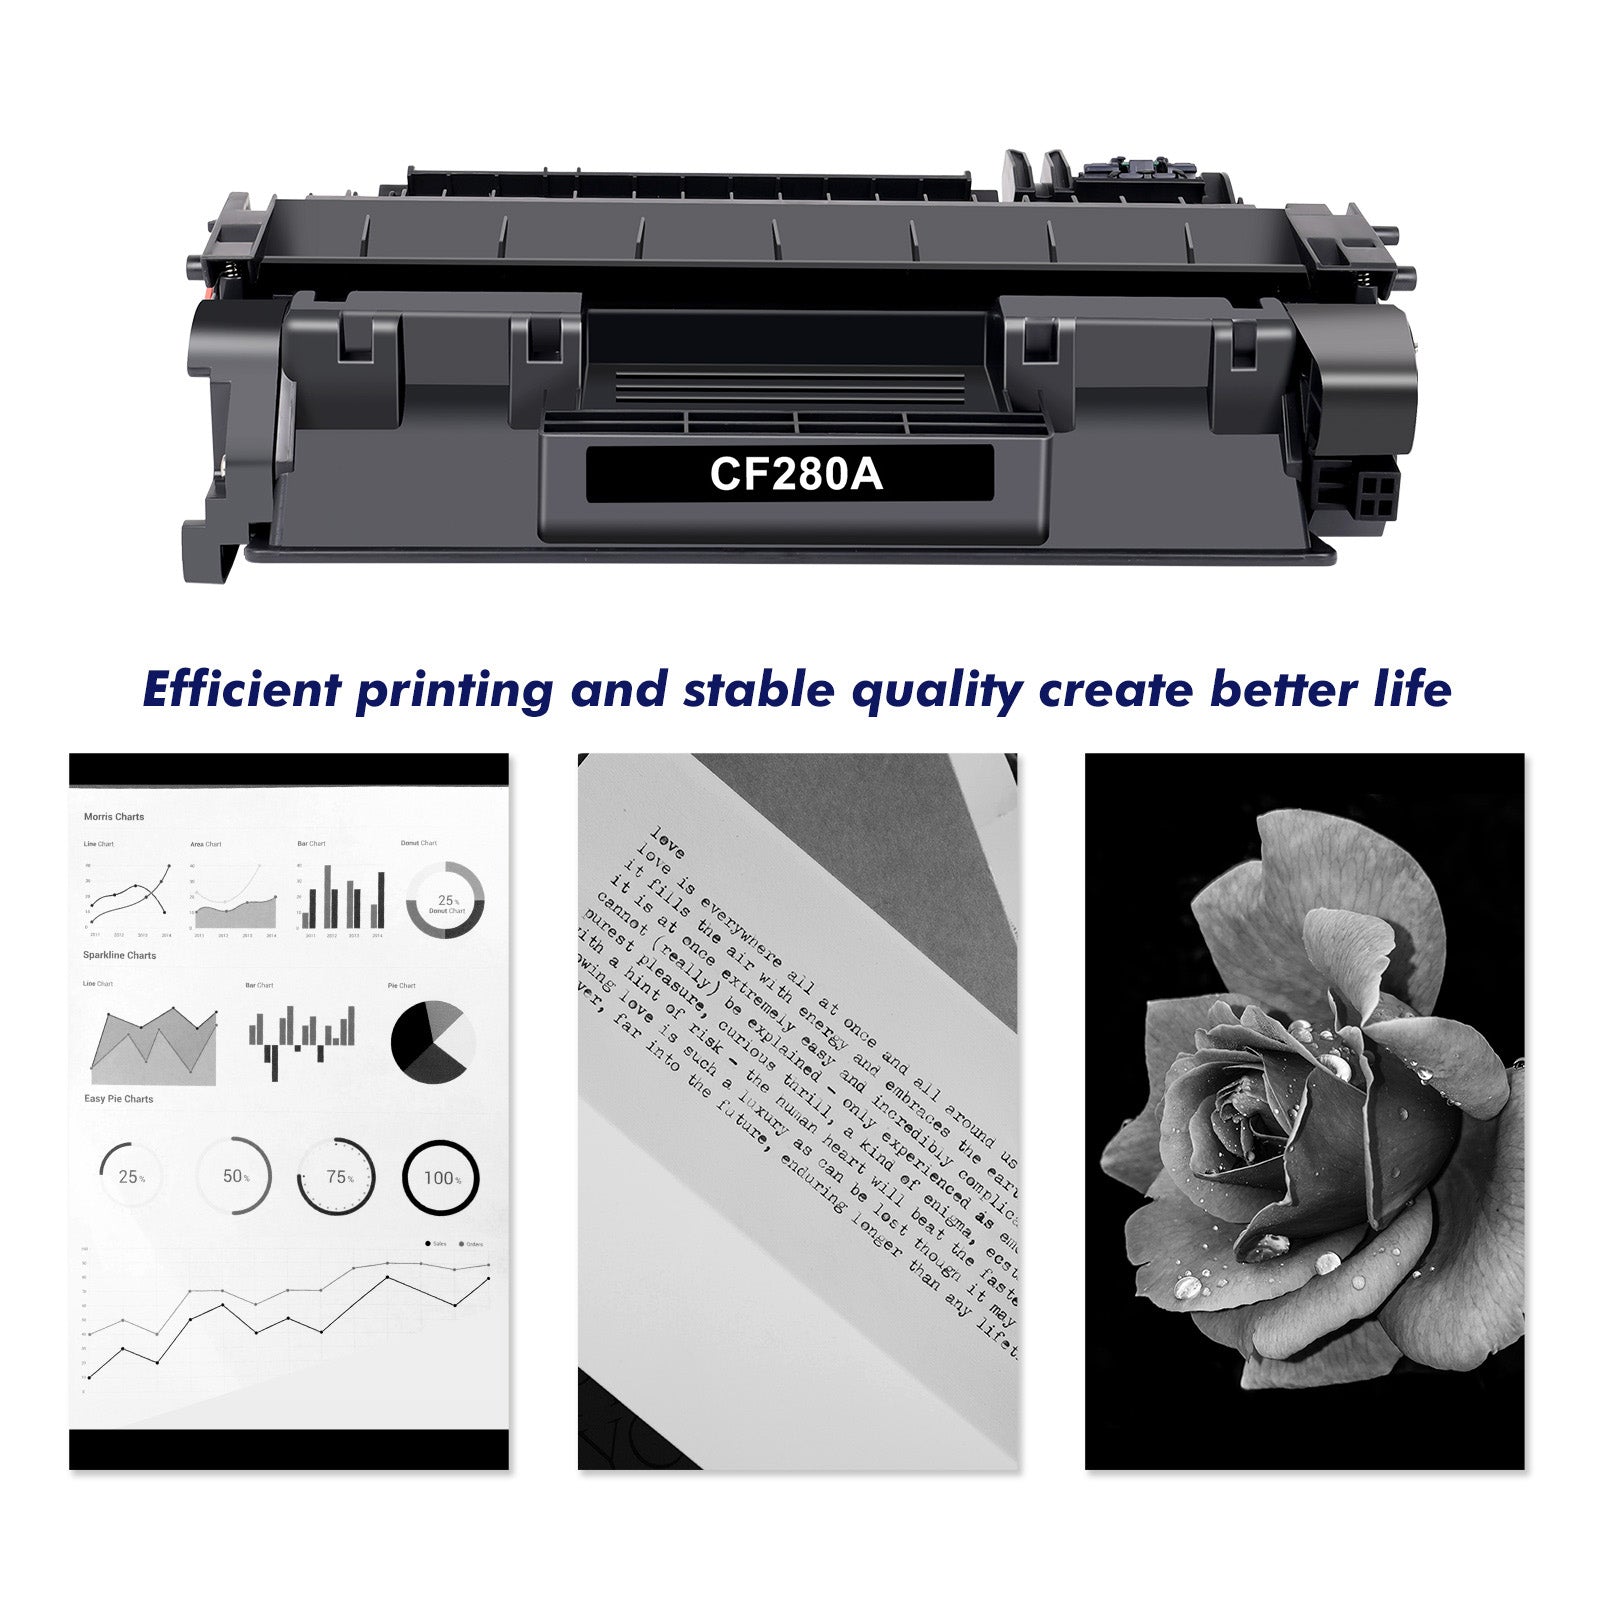 80A Toner Cartridge Black | CF280A Replacement Toner for HP 80A (CF280AD1) CF280A 80X CF280X for HP Pro 400 M401A M401D M401N M401DNE MFP M425DN Printer Ink (2-Pack)